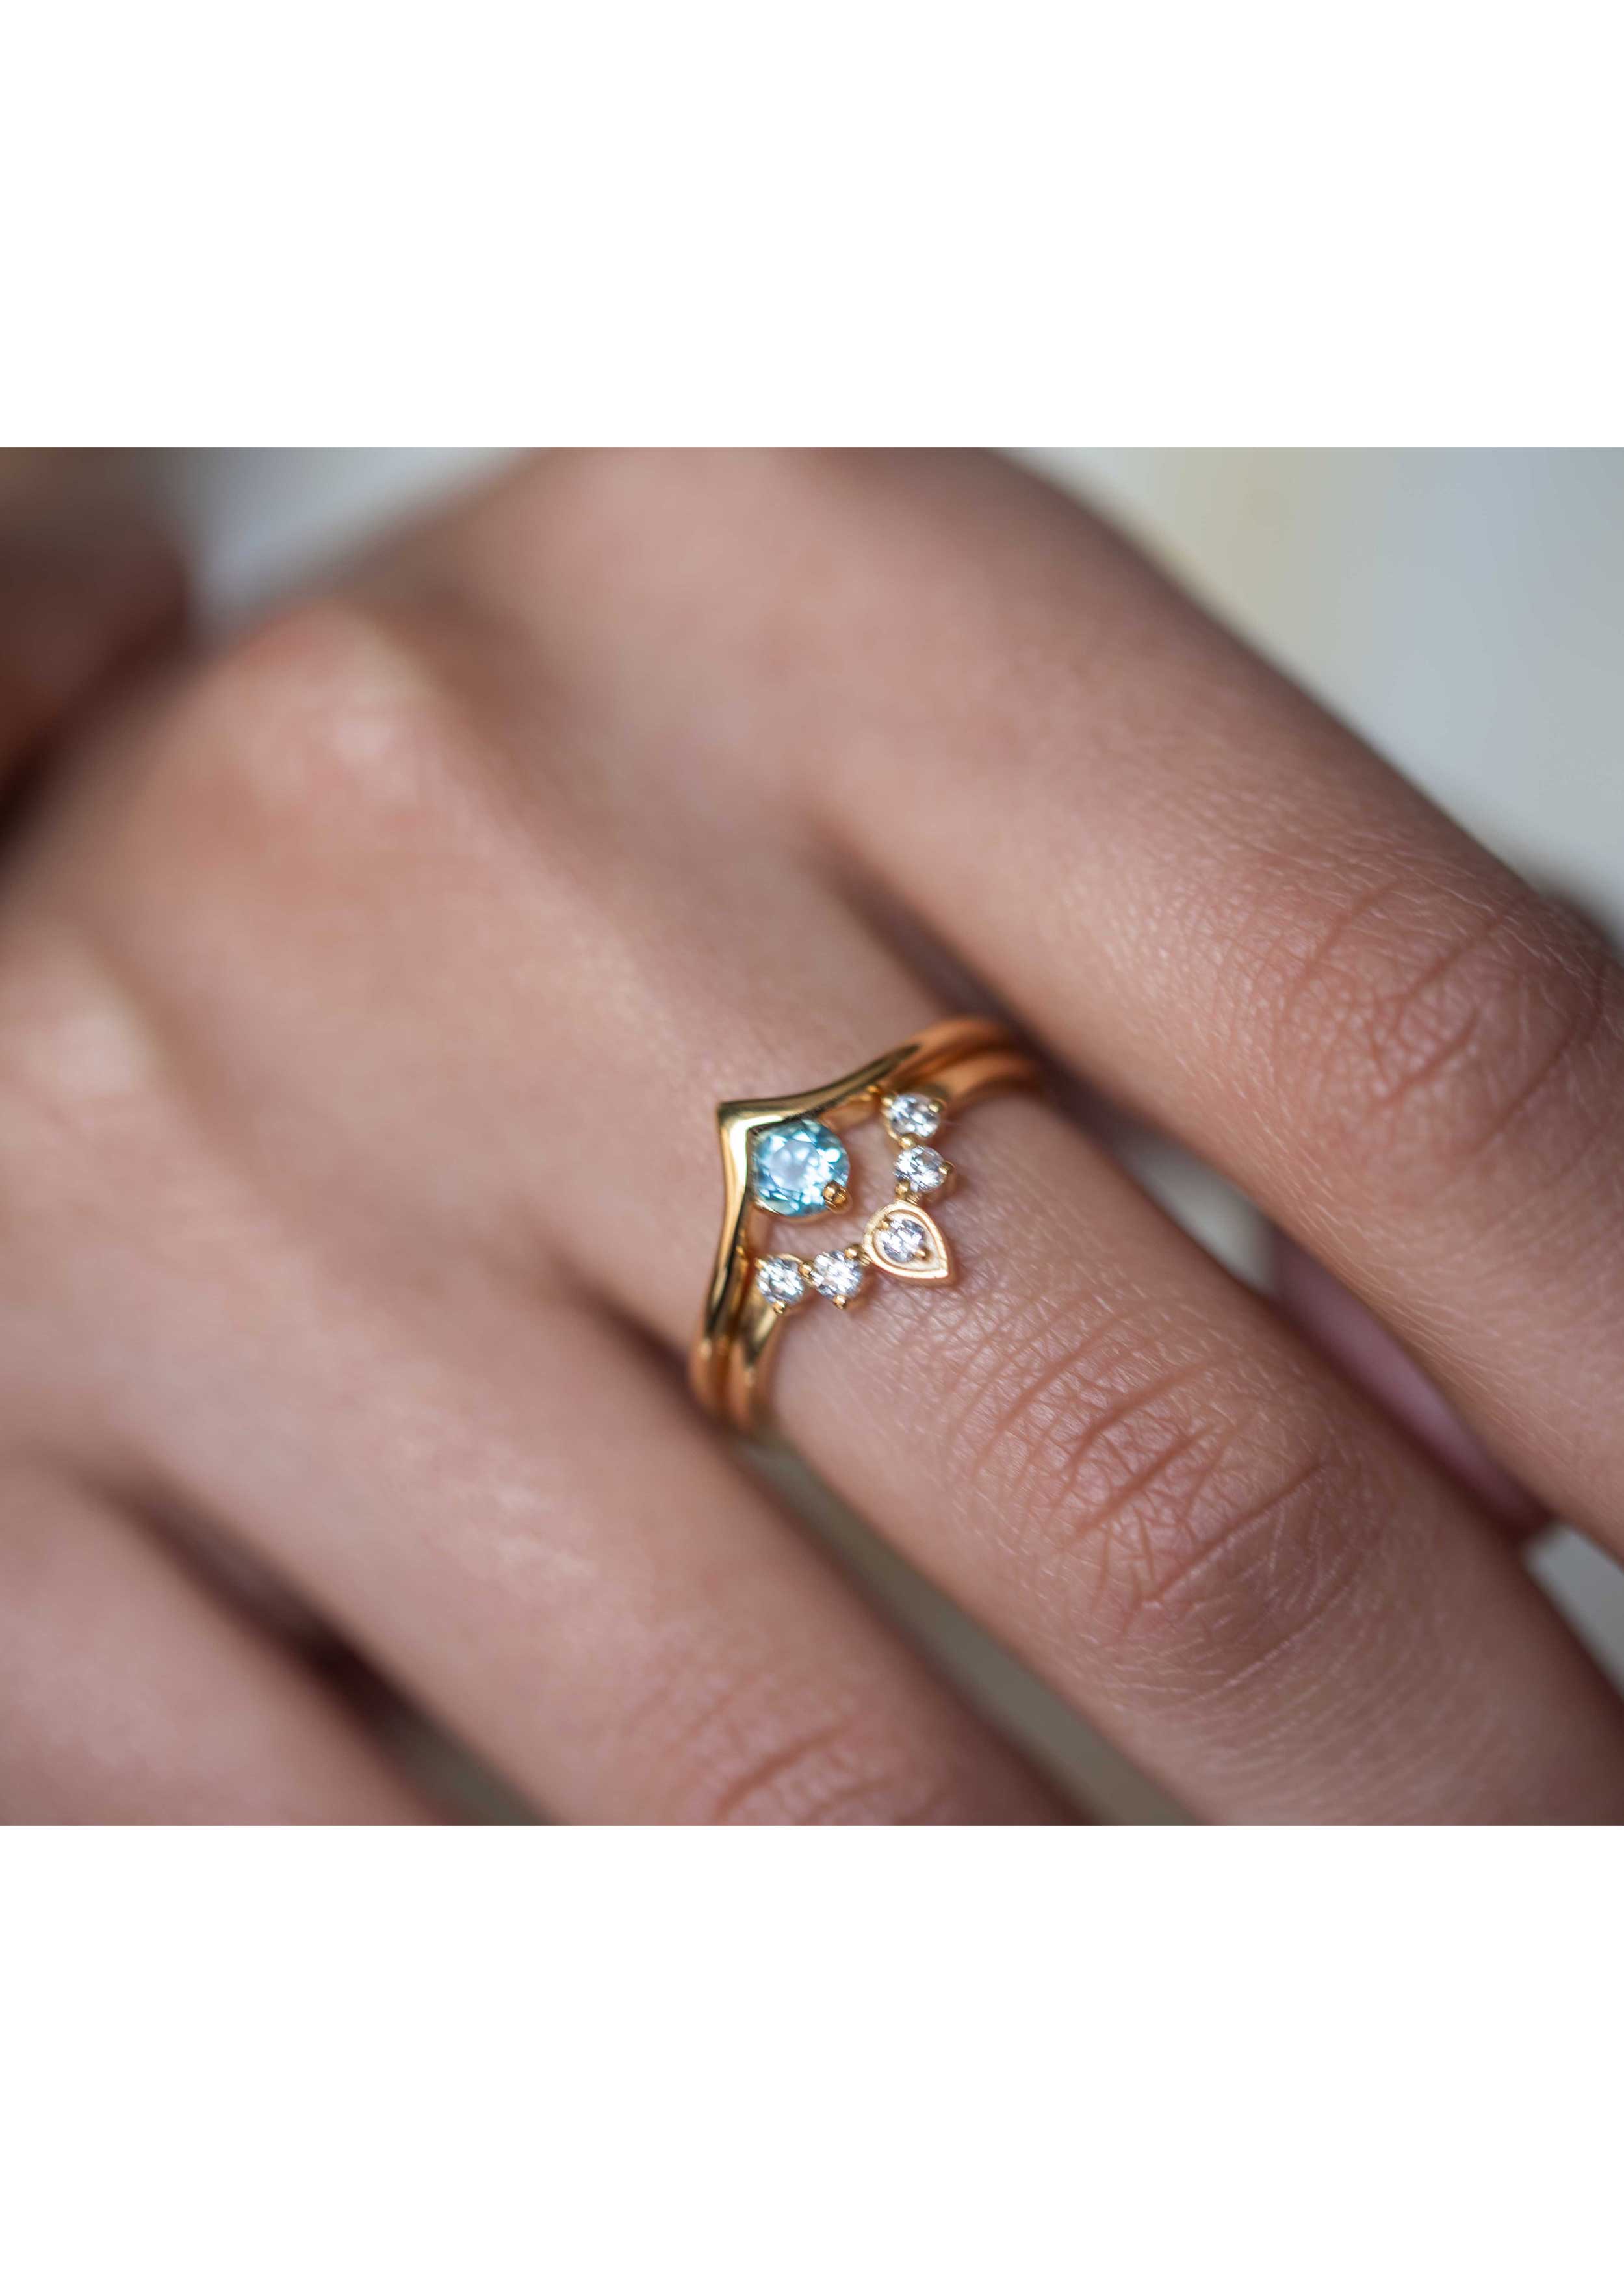 Chevron Gemstone Ring, Peak V shape ring in gold vermeil Swiss Blue Topaz Genuine gifts for women stacking stackable engagement promise ring